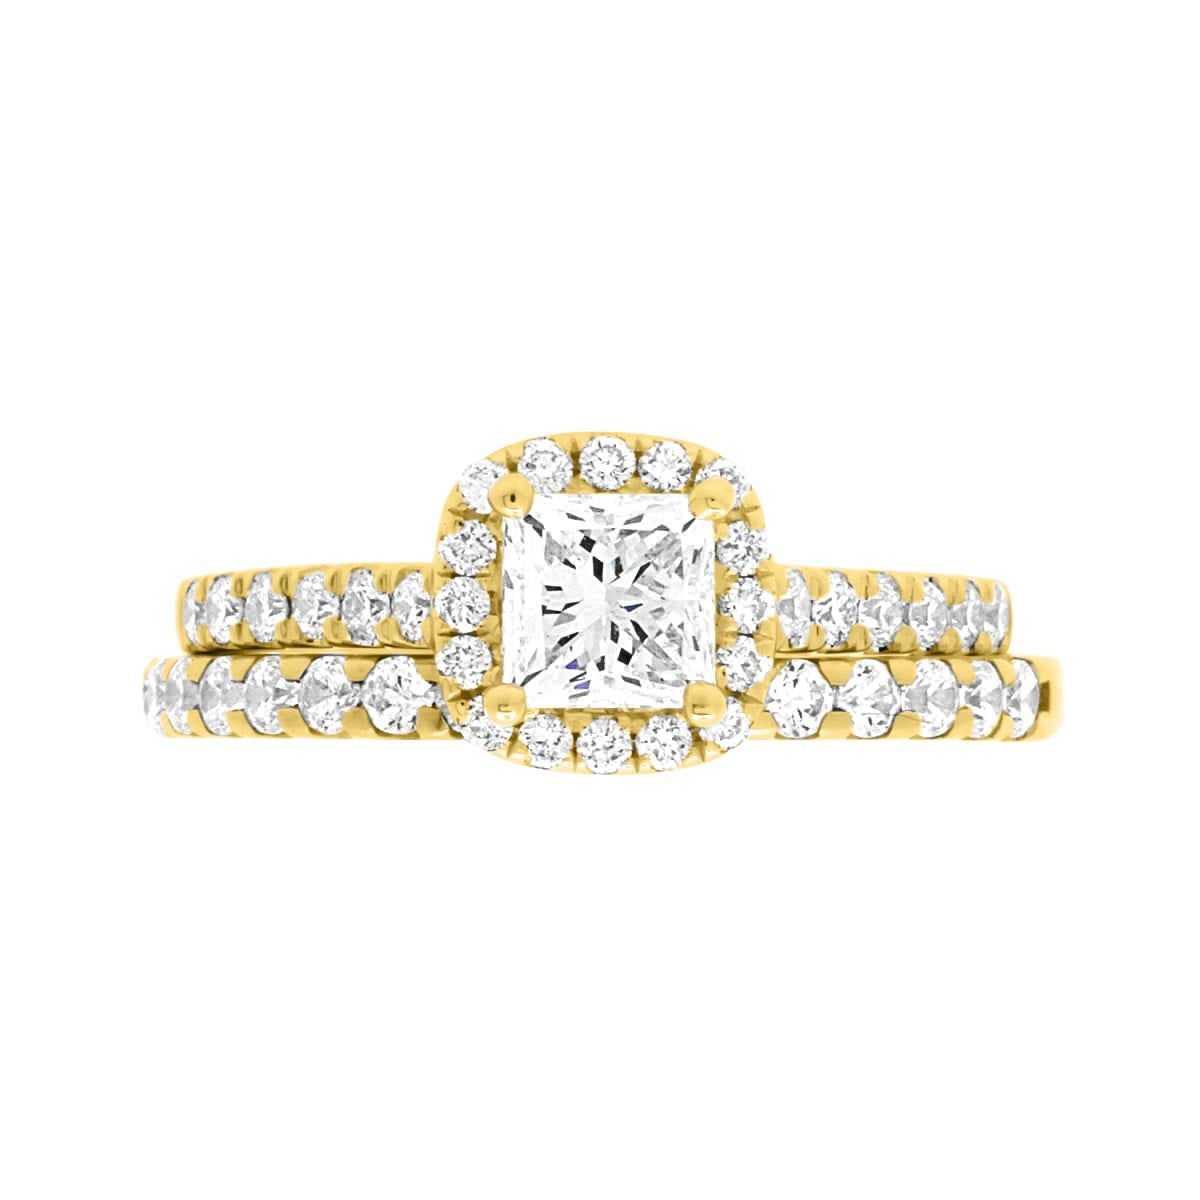 Princess Cut Diamond Halo Ring in yellow gold with a diamond wedding ring